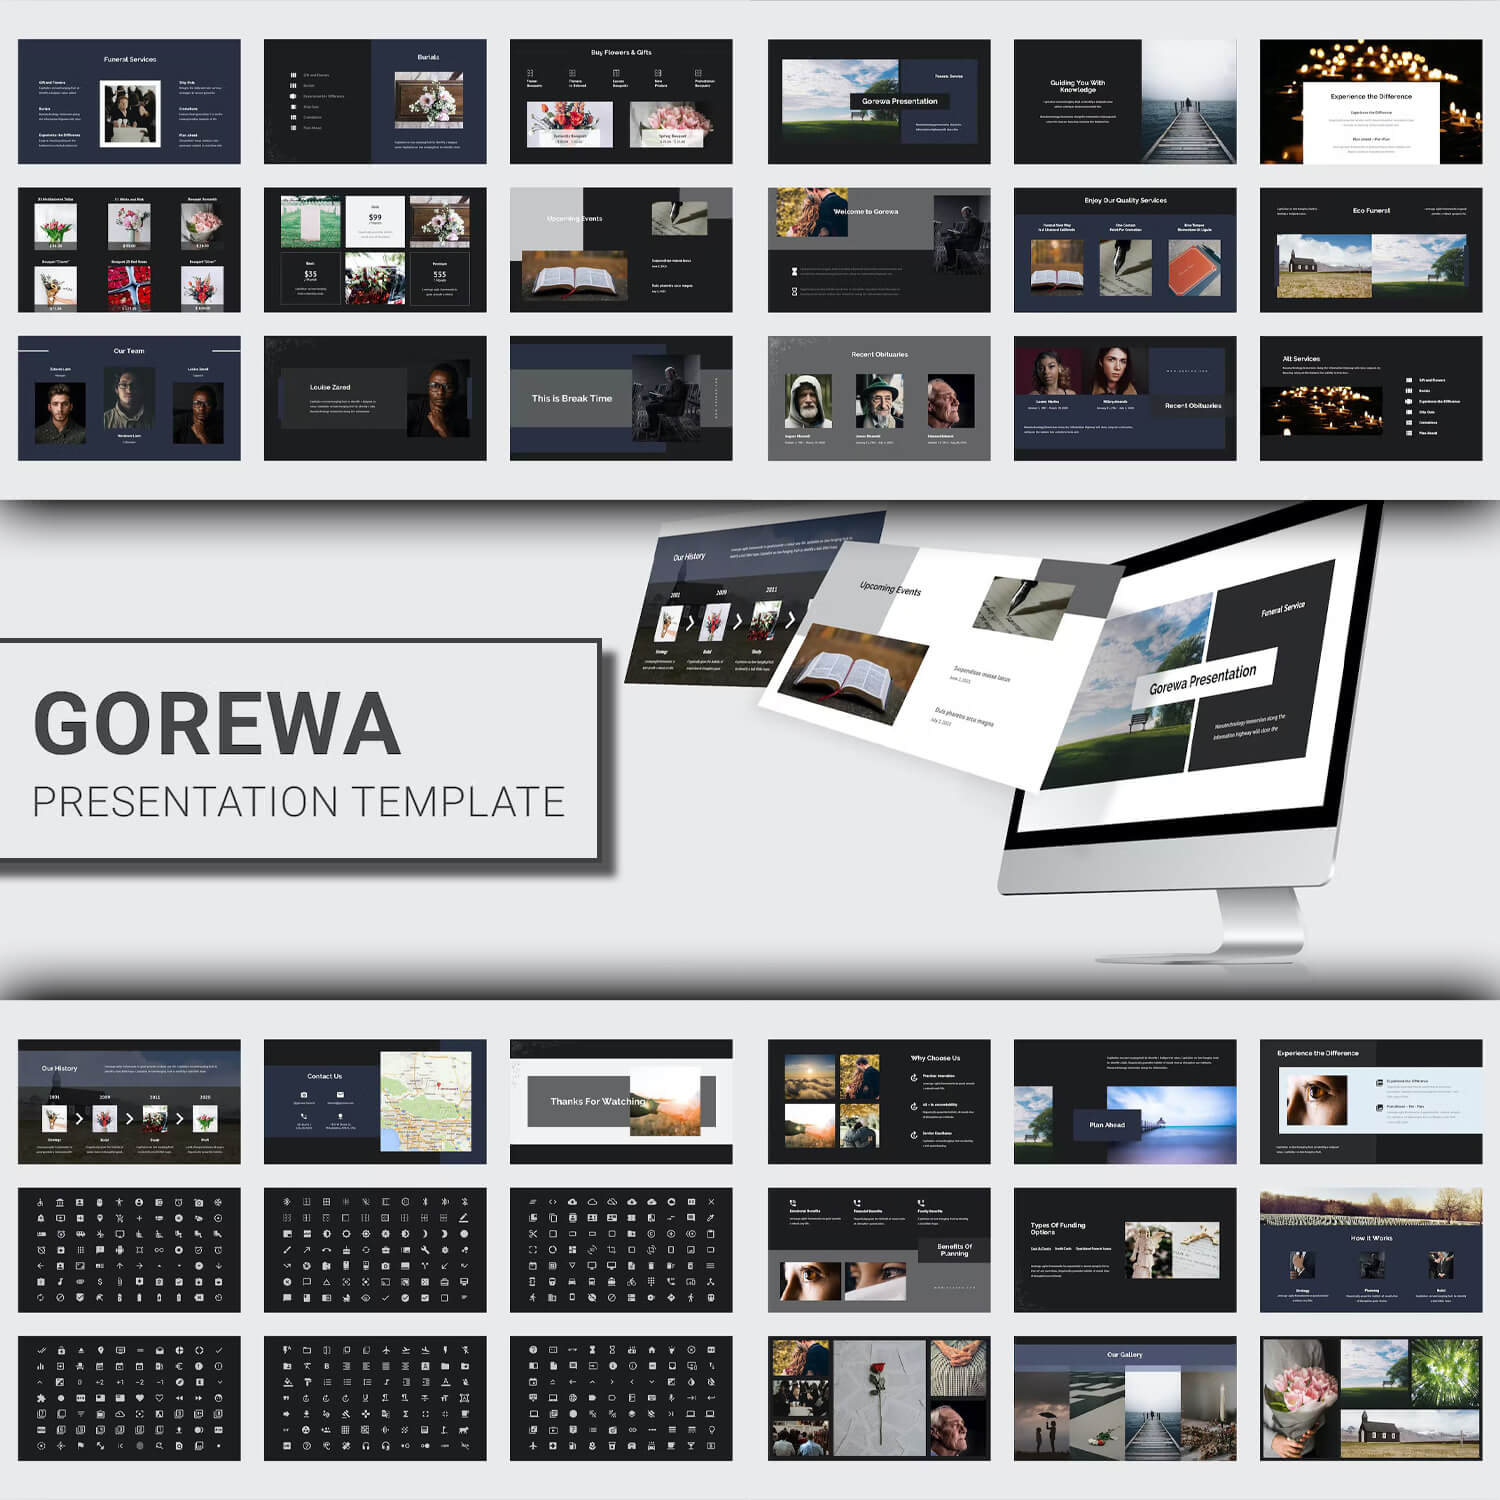 Preview Gorewa Presentation template on the computer.